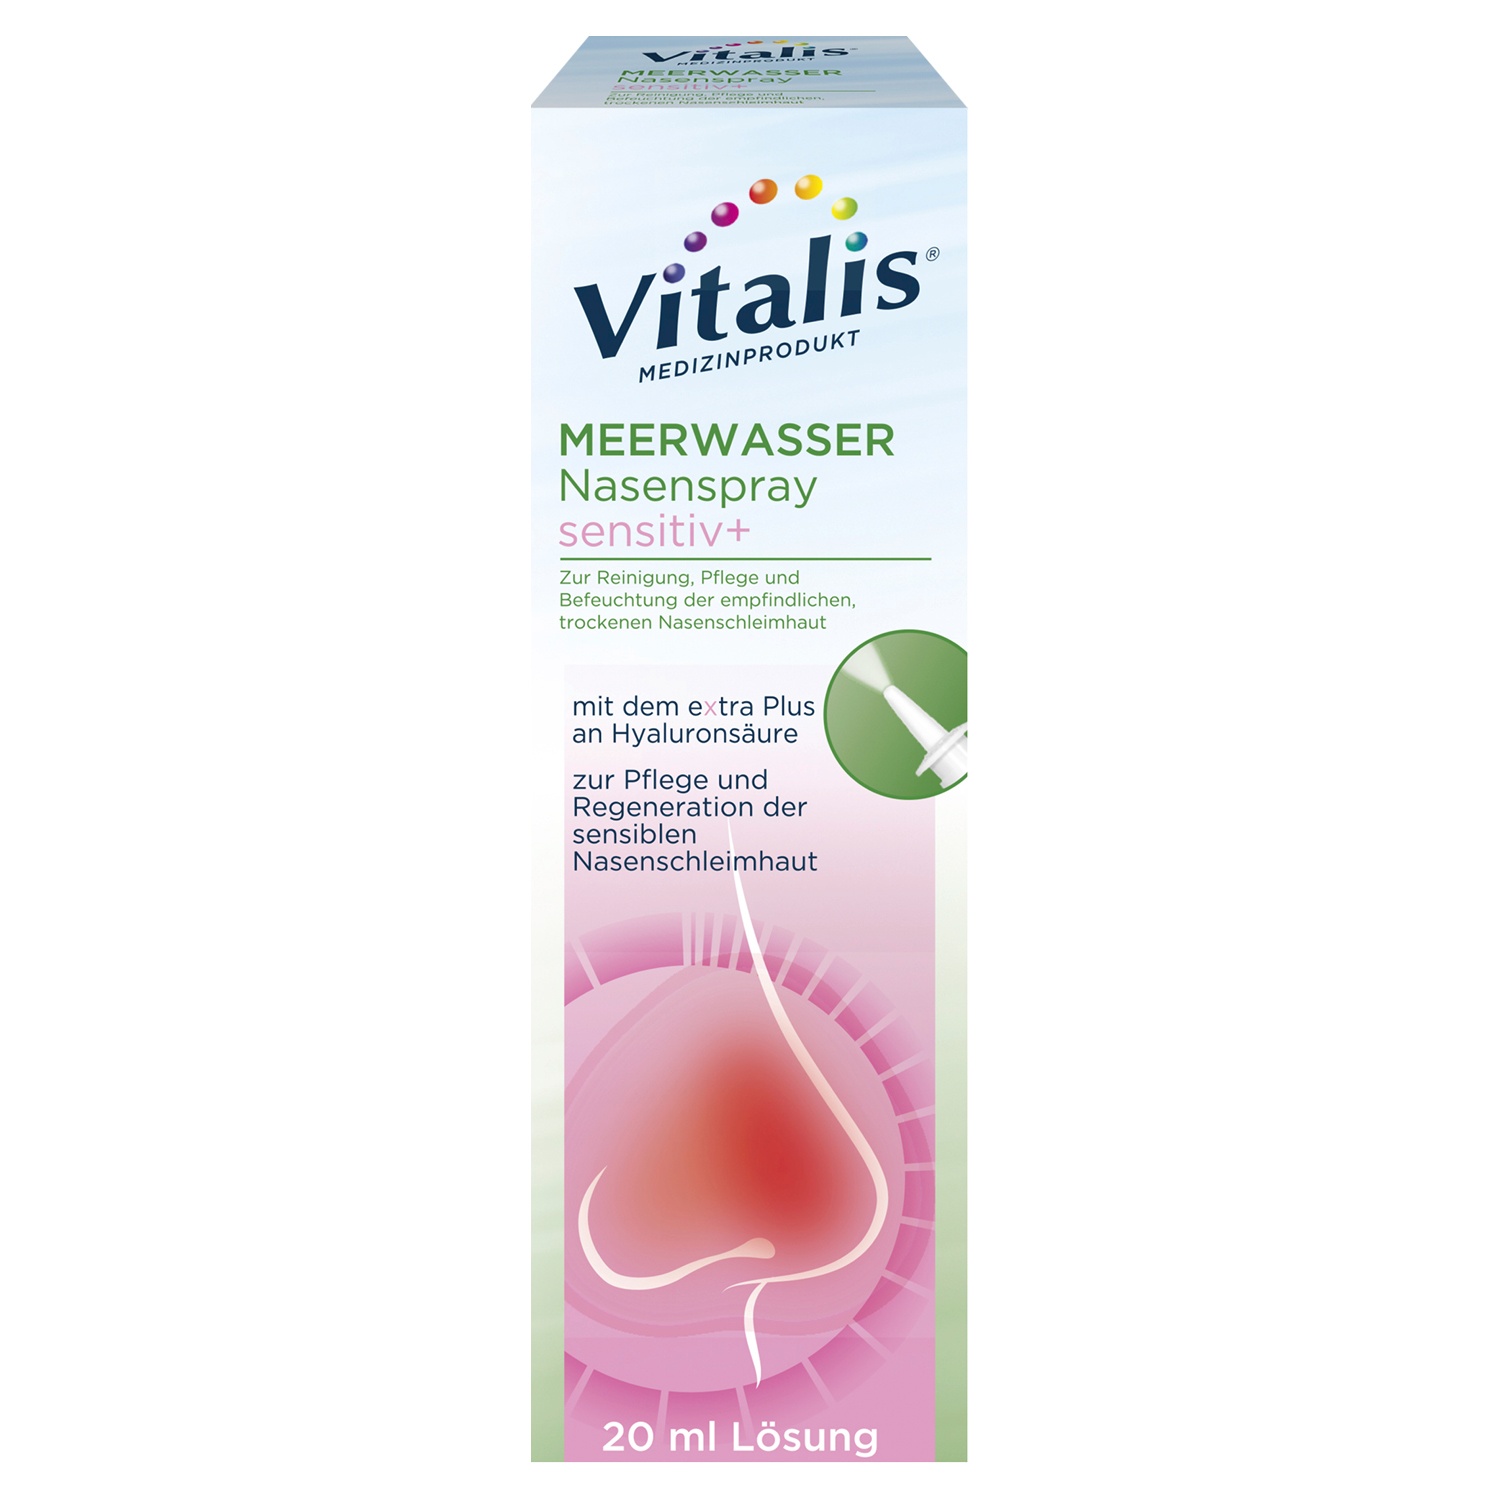 Vitalis® Meerwasser Nasenspray